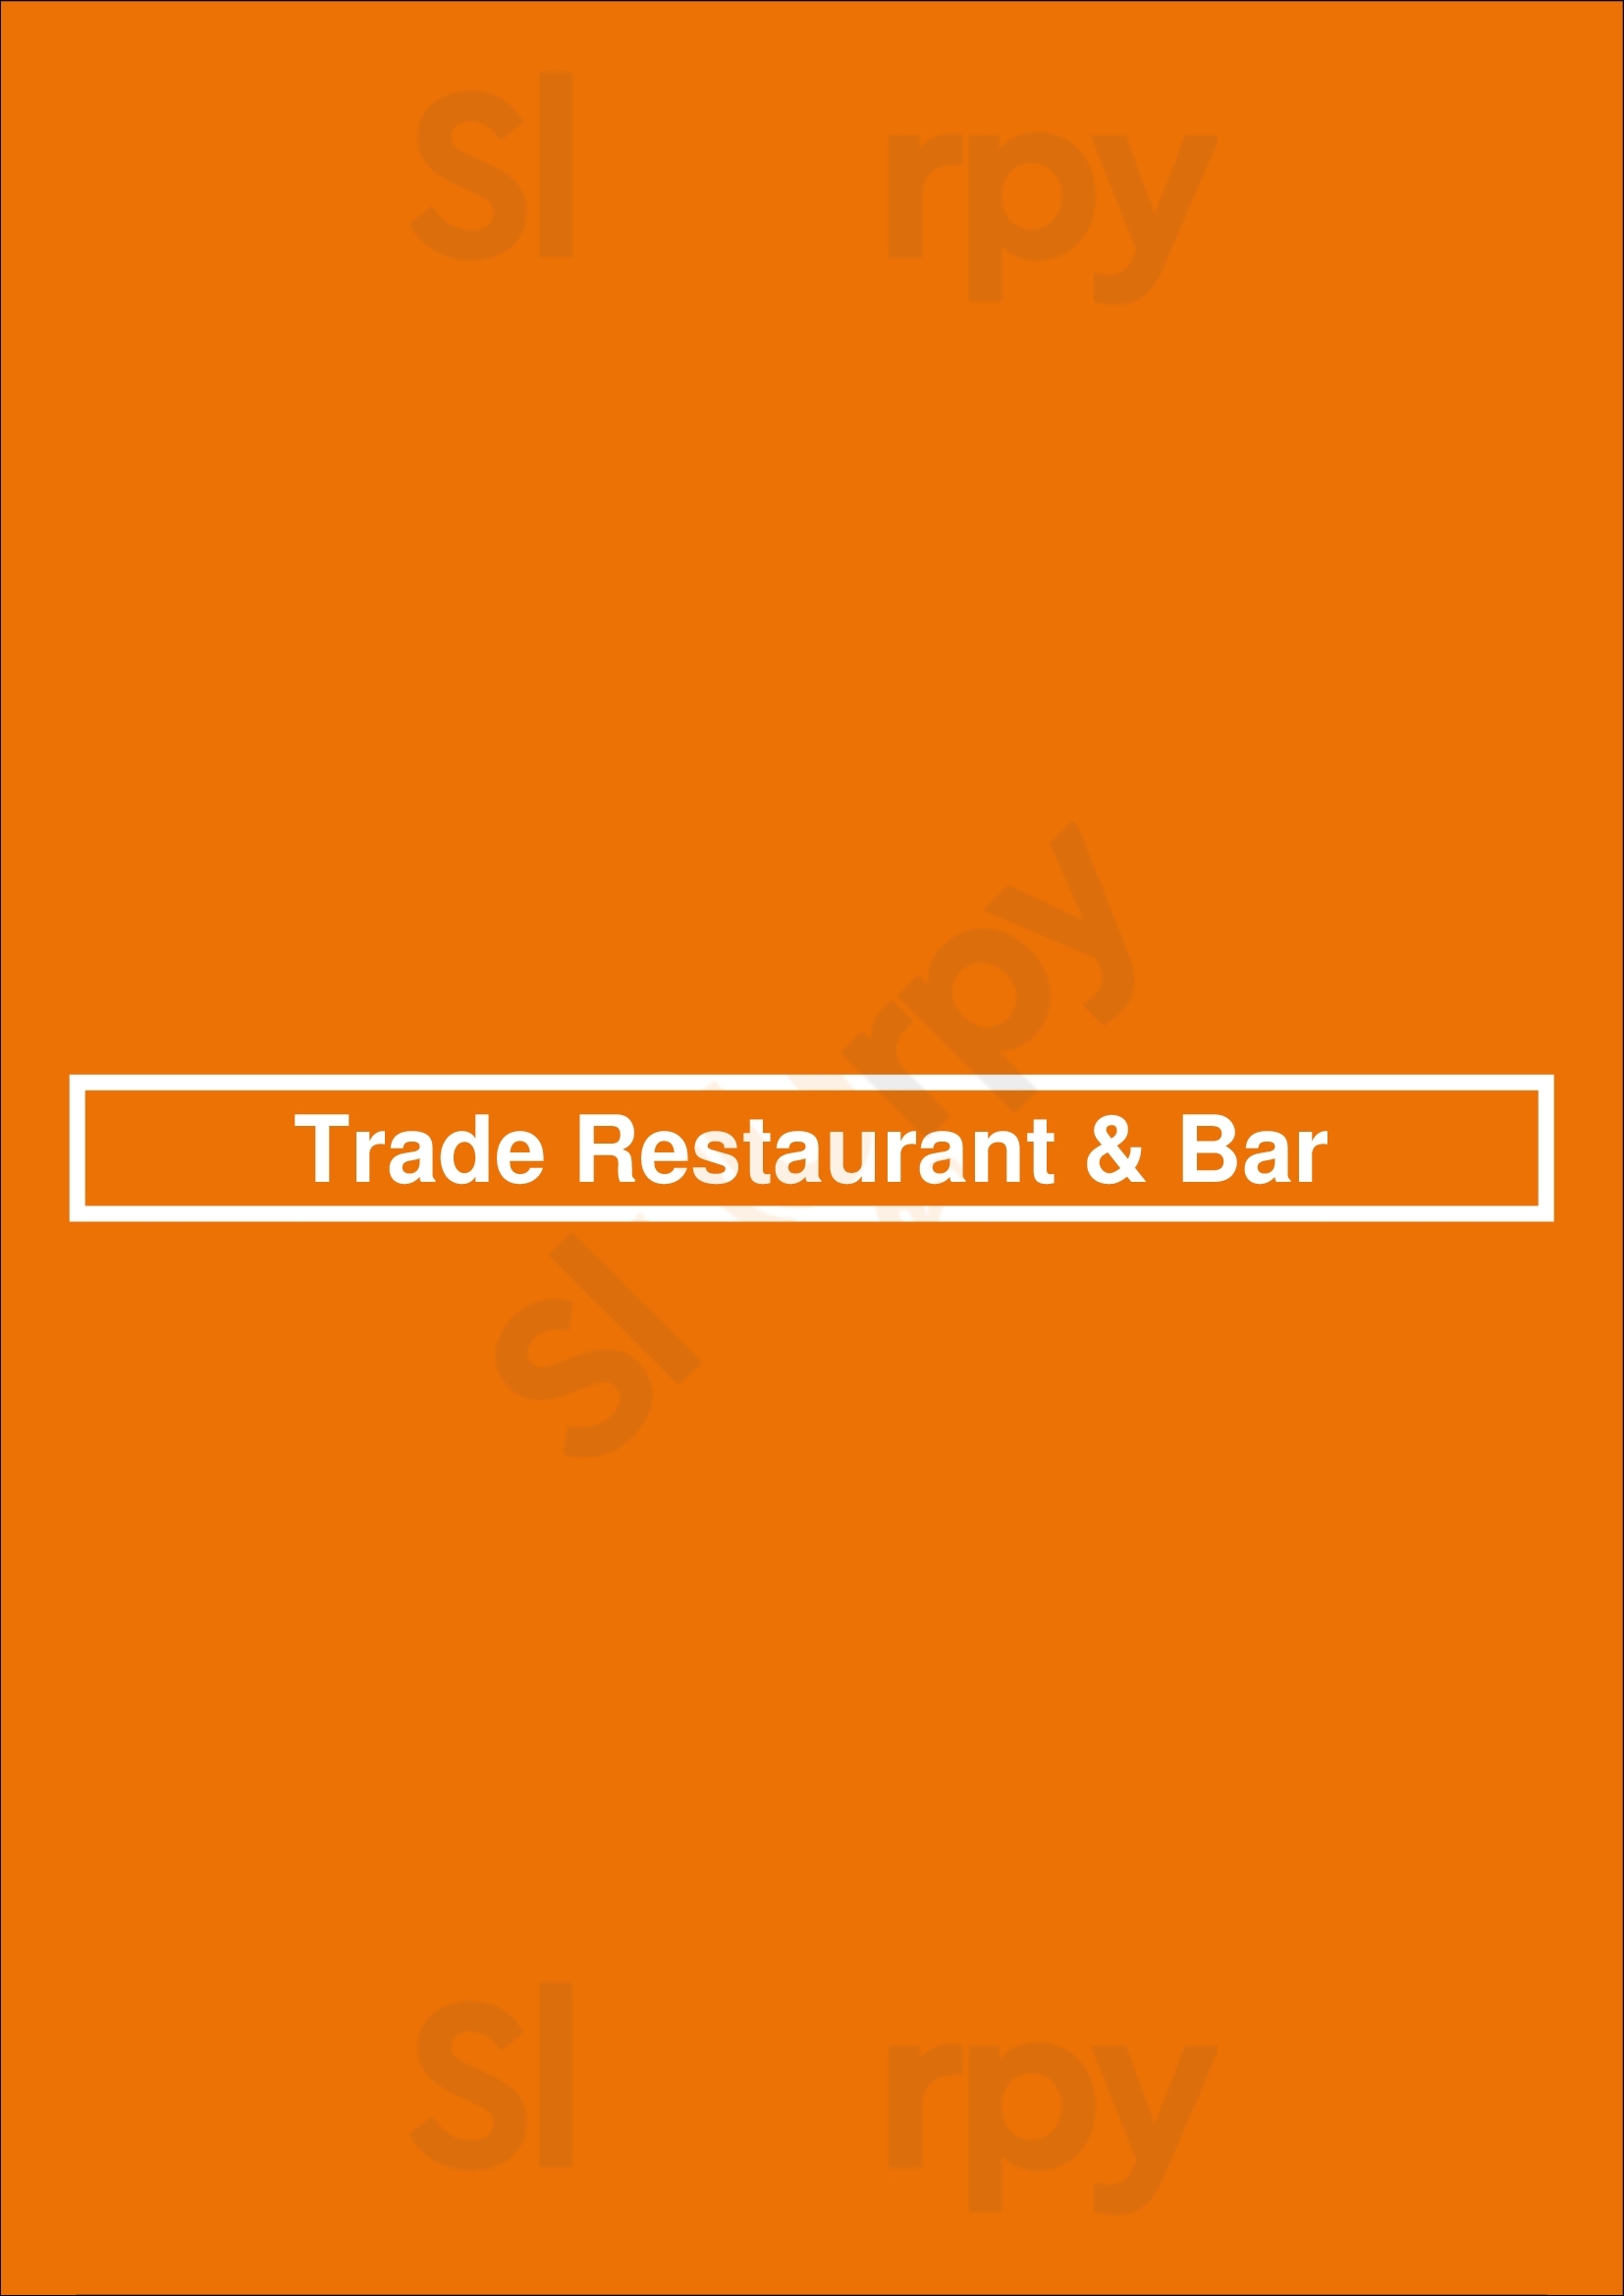 Trade Restaurant & Bar Charlotte Menu - 1